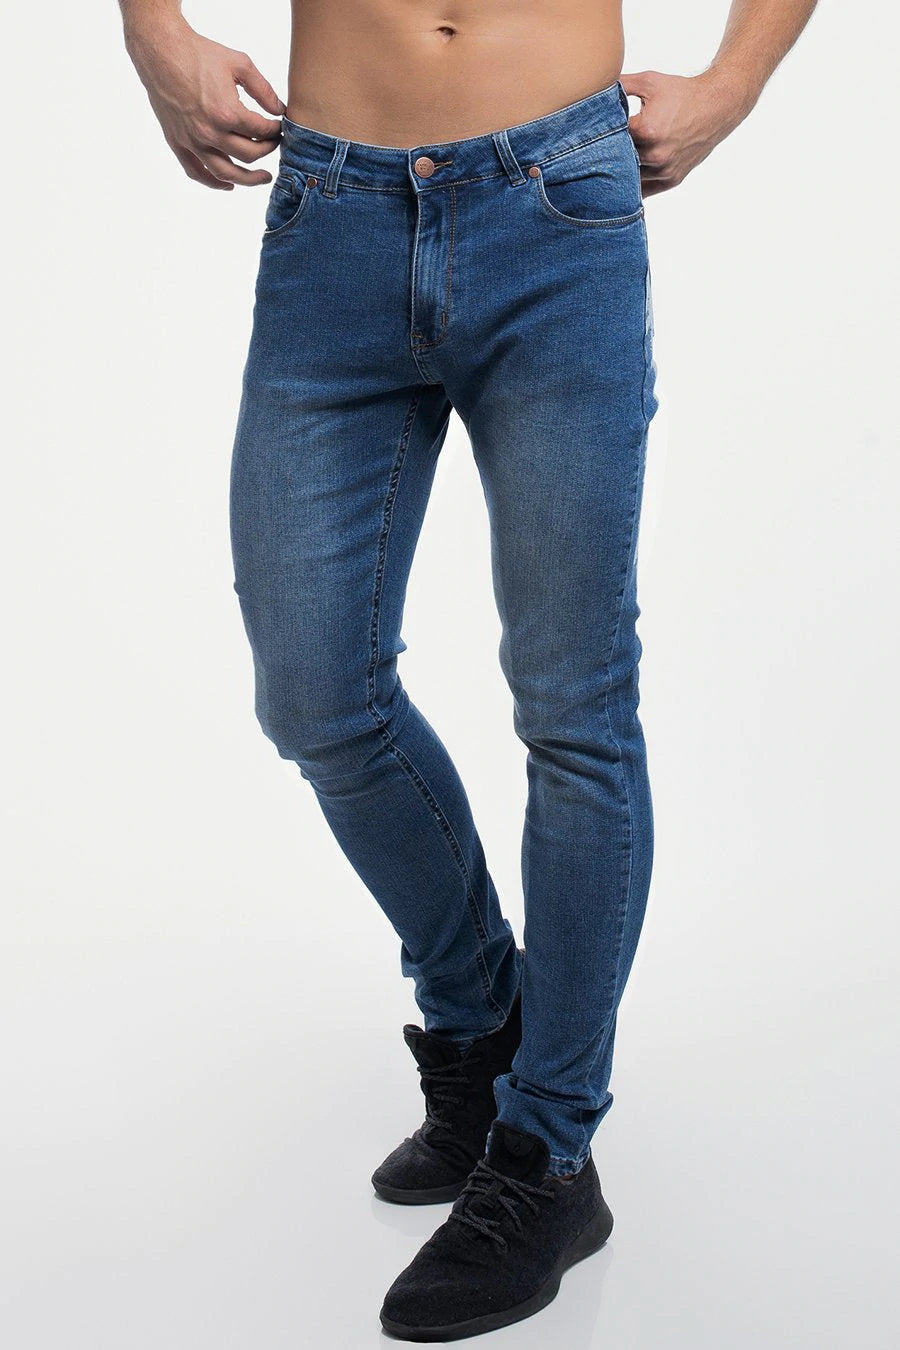 Barbell Apparel Men's Slim Athletic Fit Jeans Destroyed Dark Distressed 28  